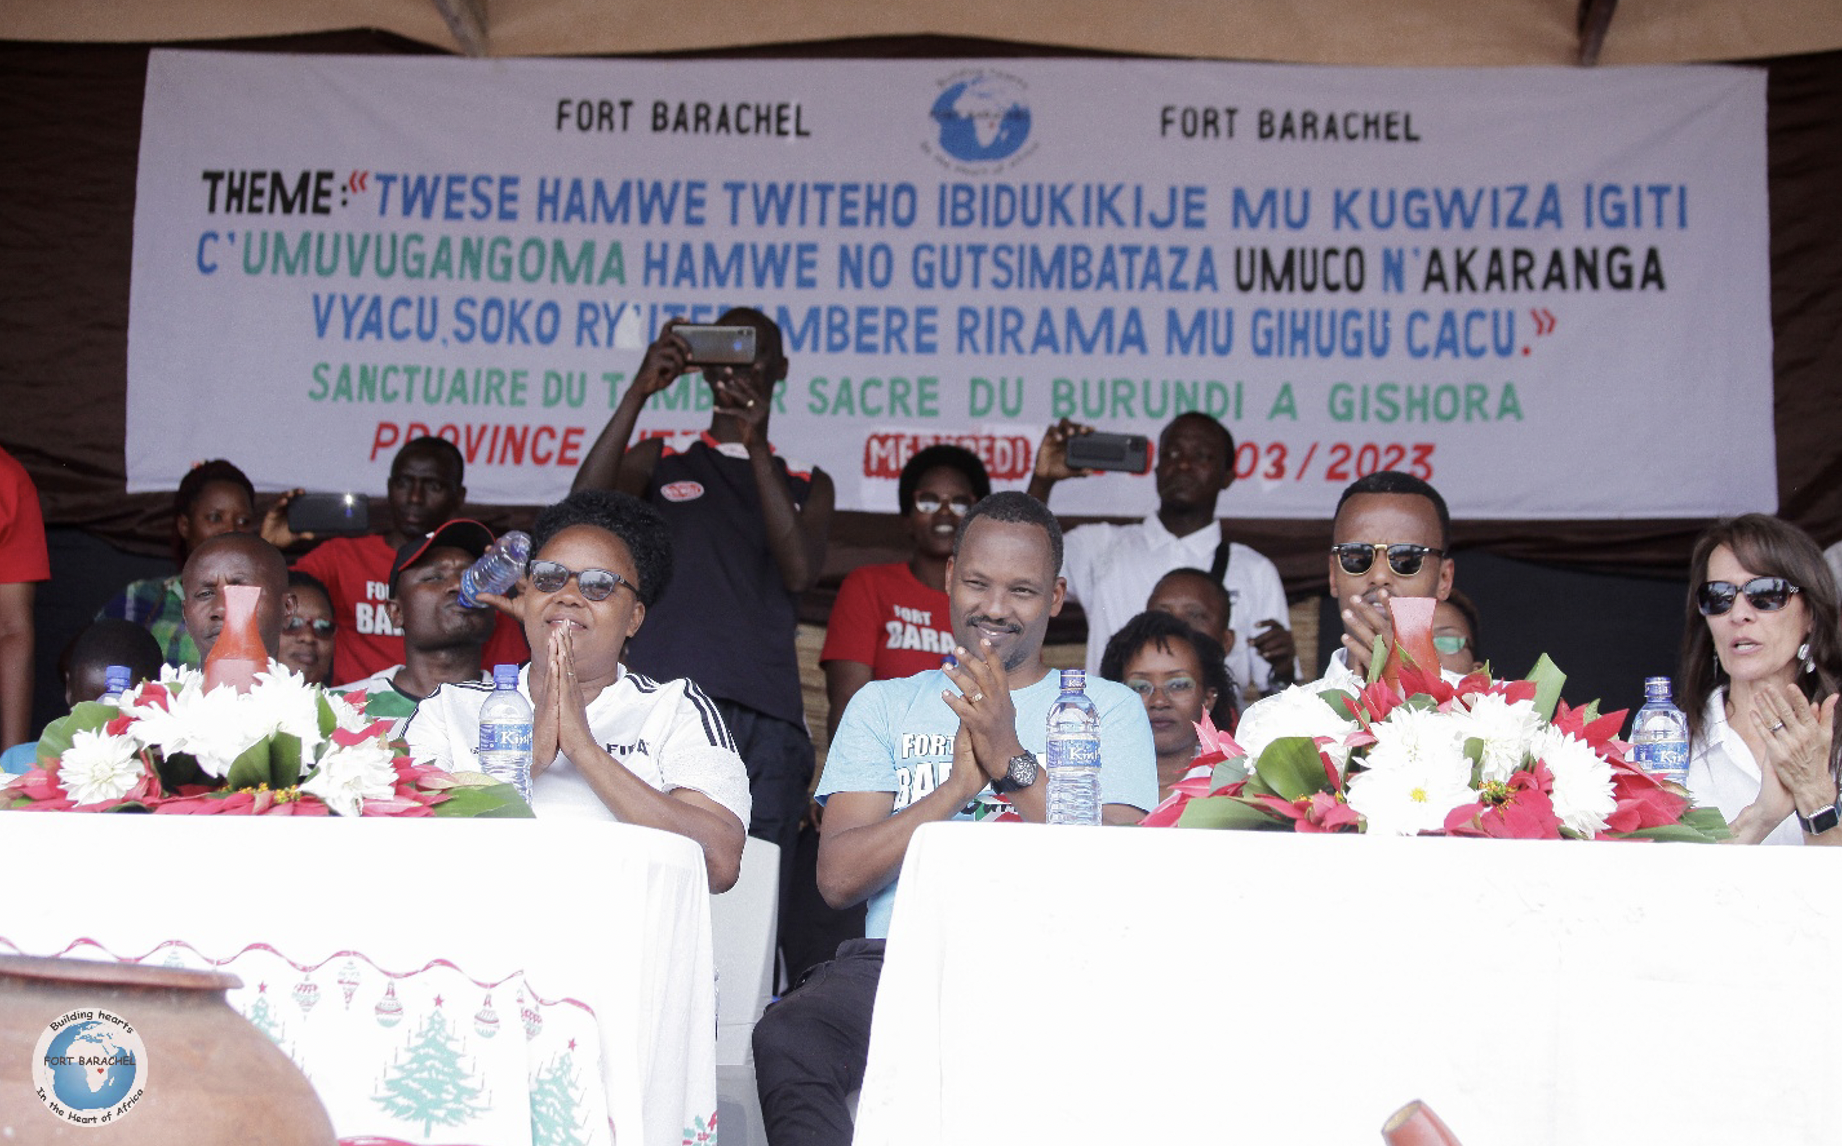 Fort Barachel Burundi at the Ceremony.png